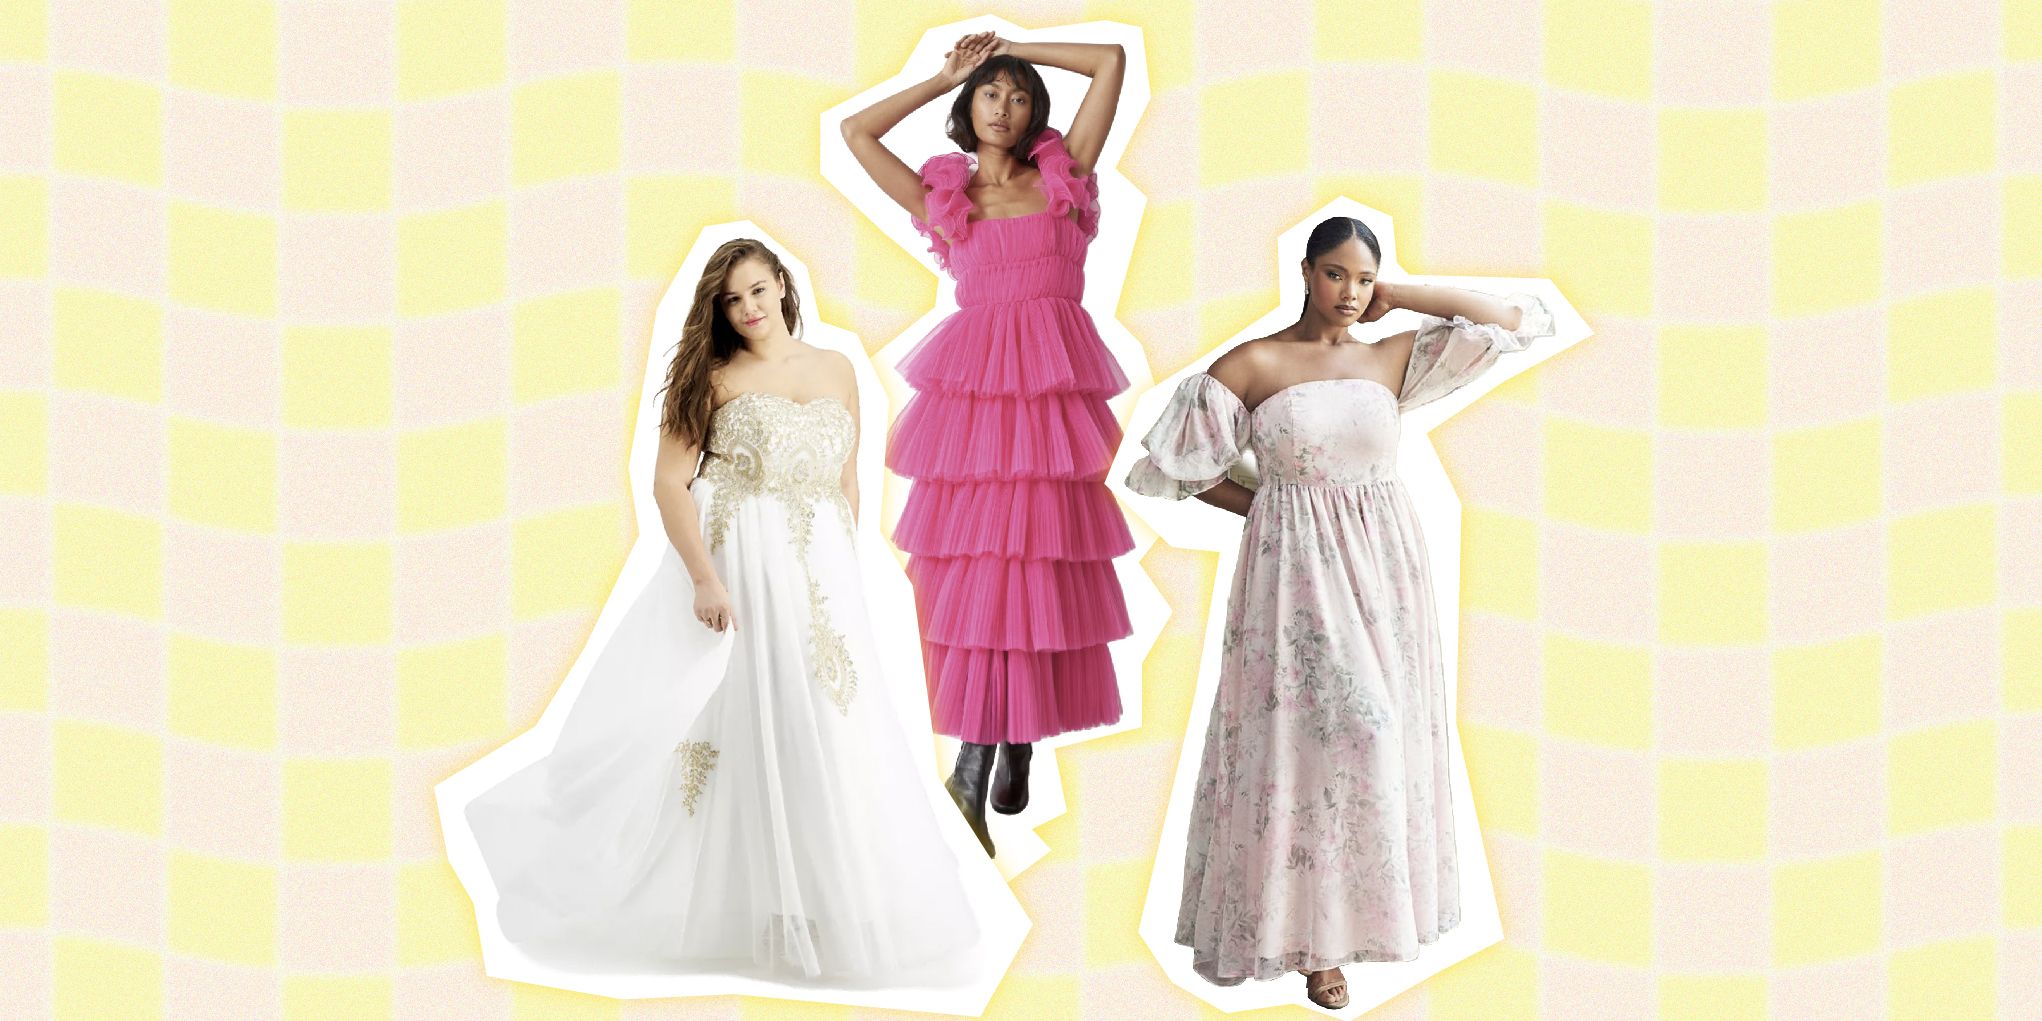 15 Best Vintage Prom Dresses Of 2022 – Retro Prom Dress Ideas